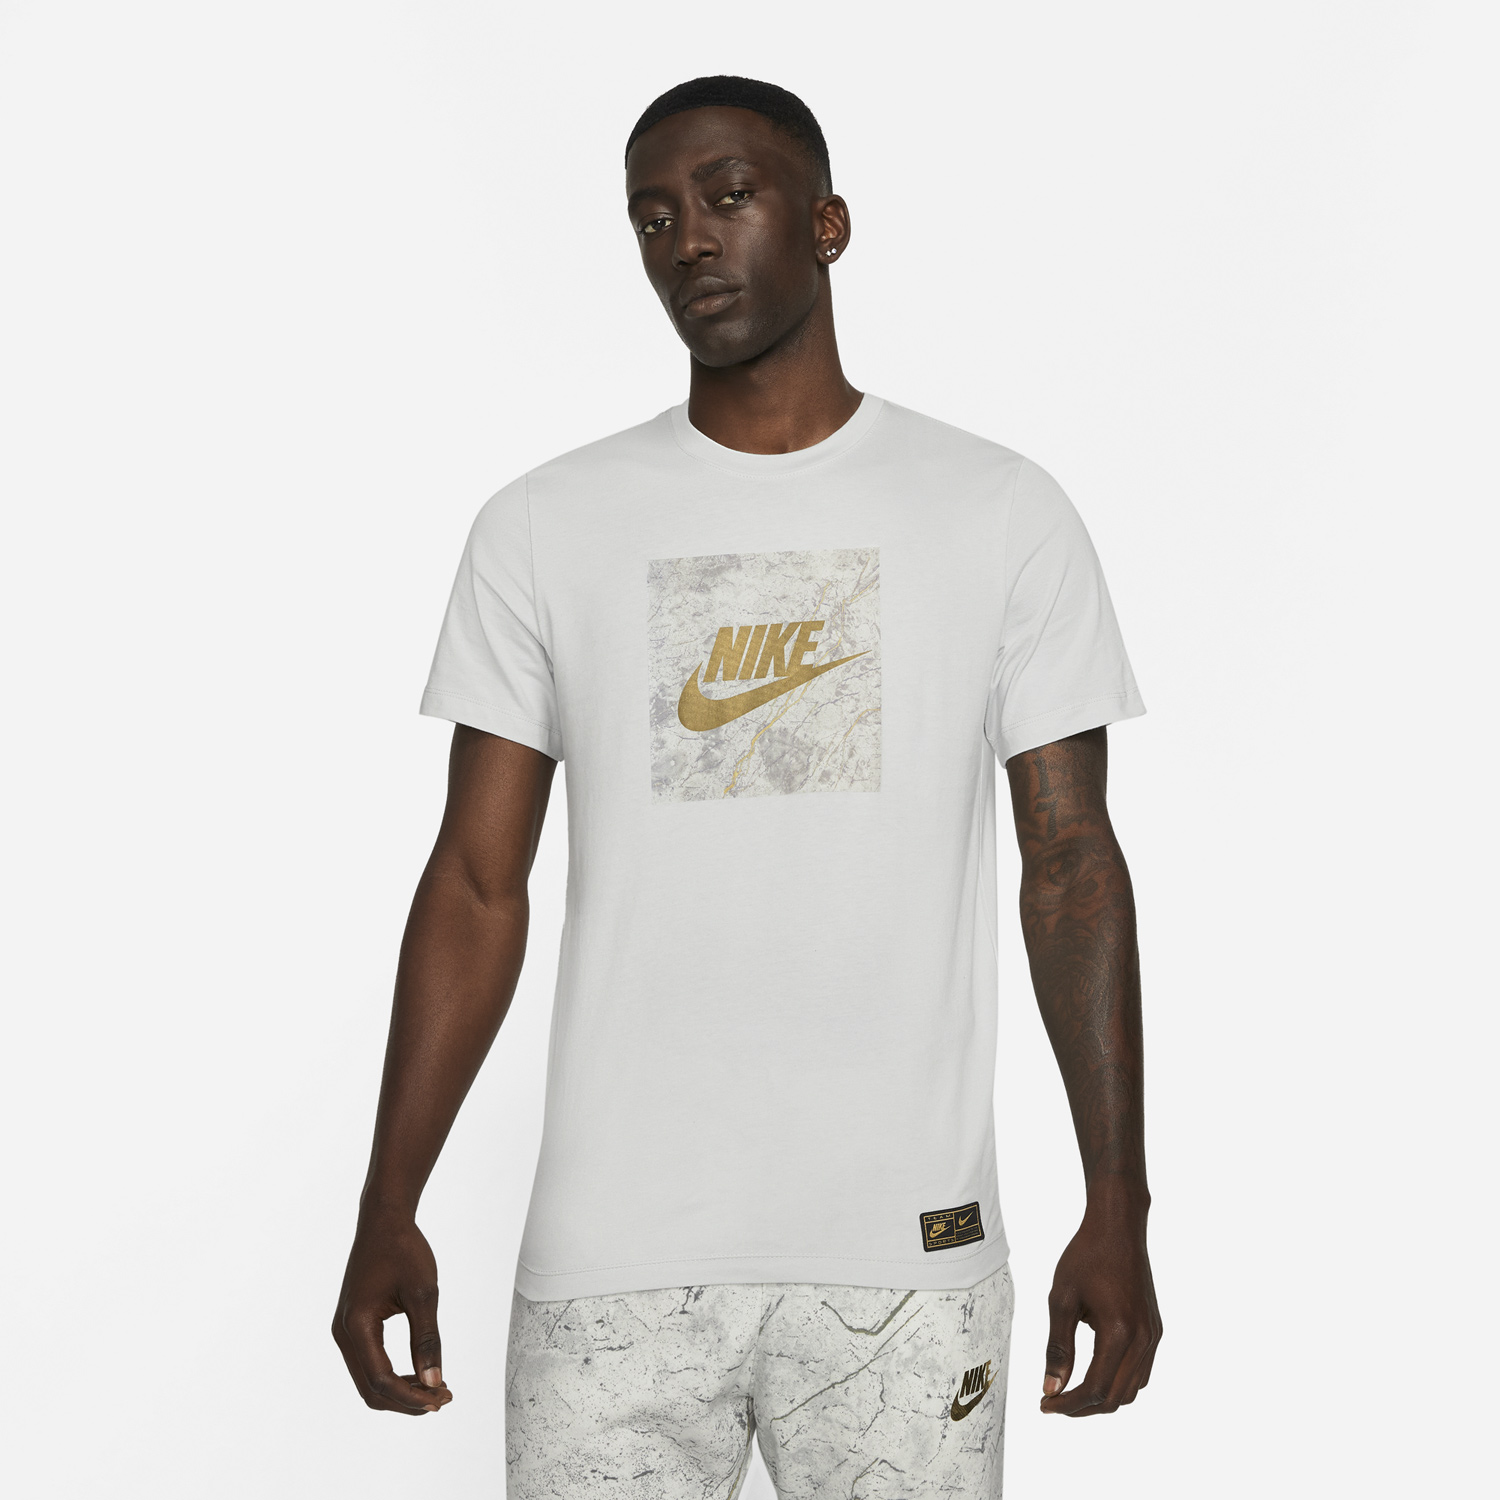 Nike Metallic Gold Shoes Shirts Hoodies Pants